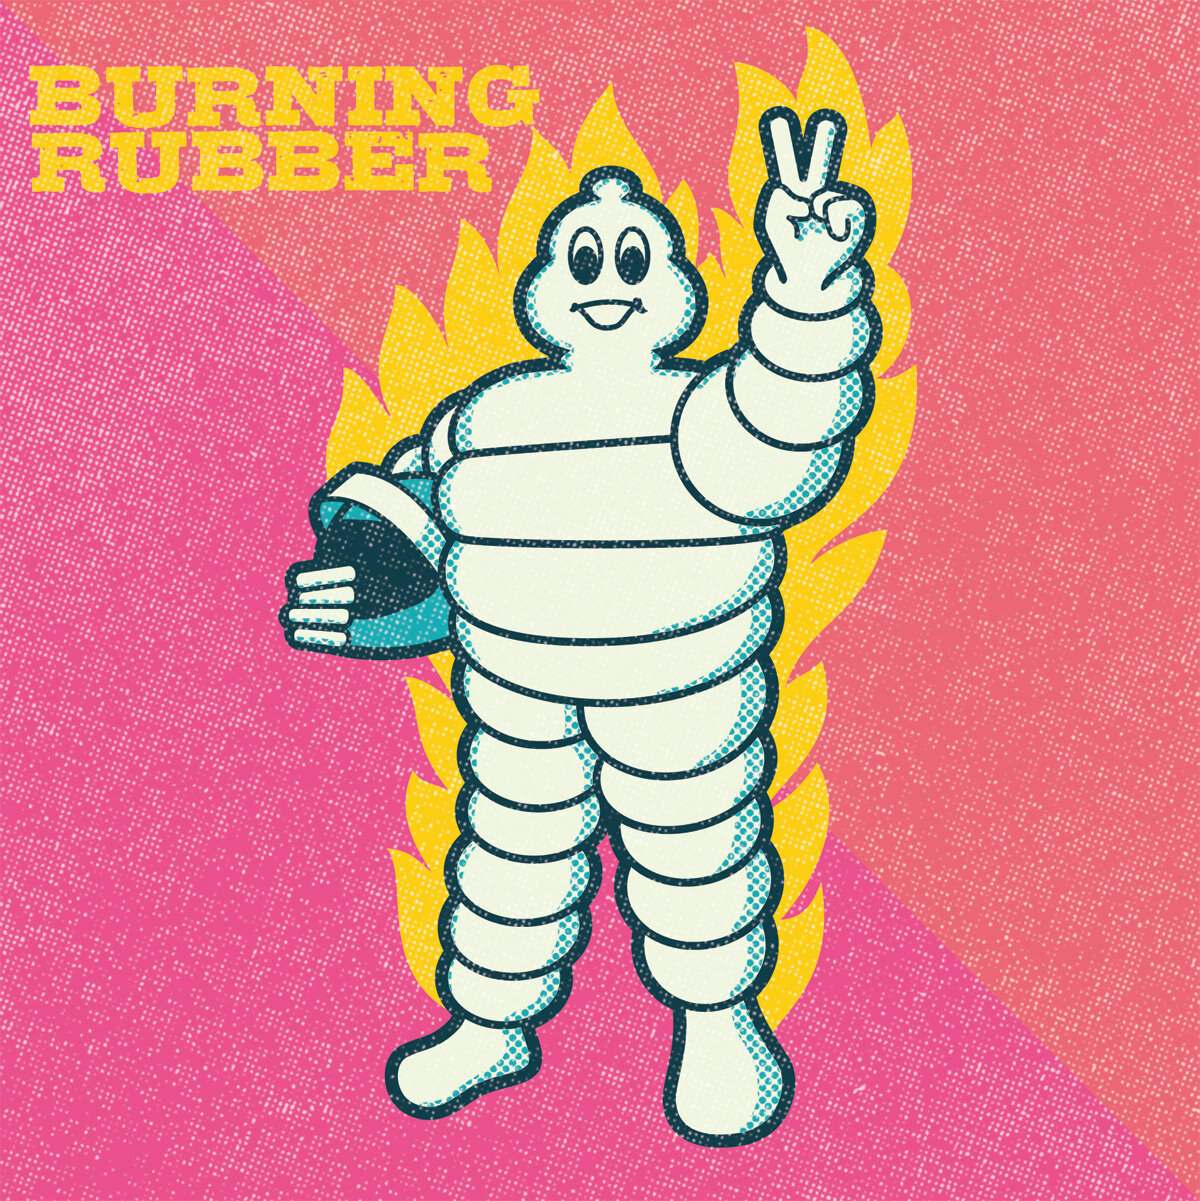 Burning Rubber